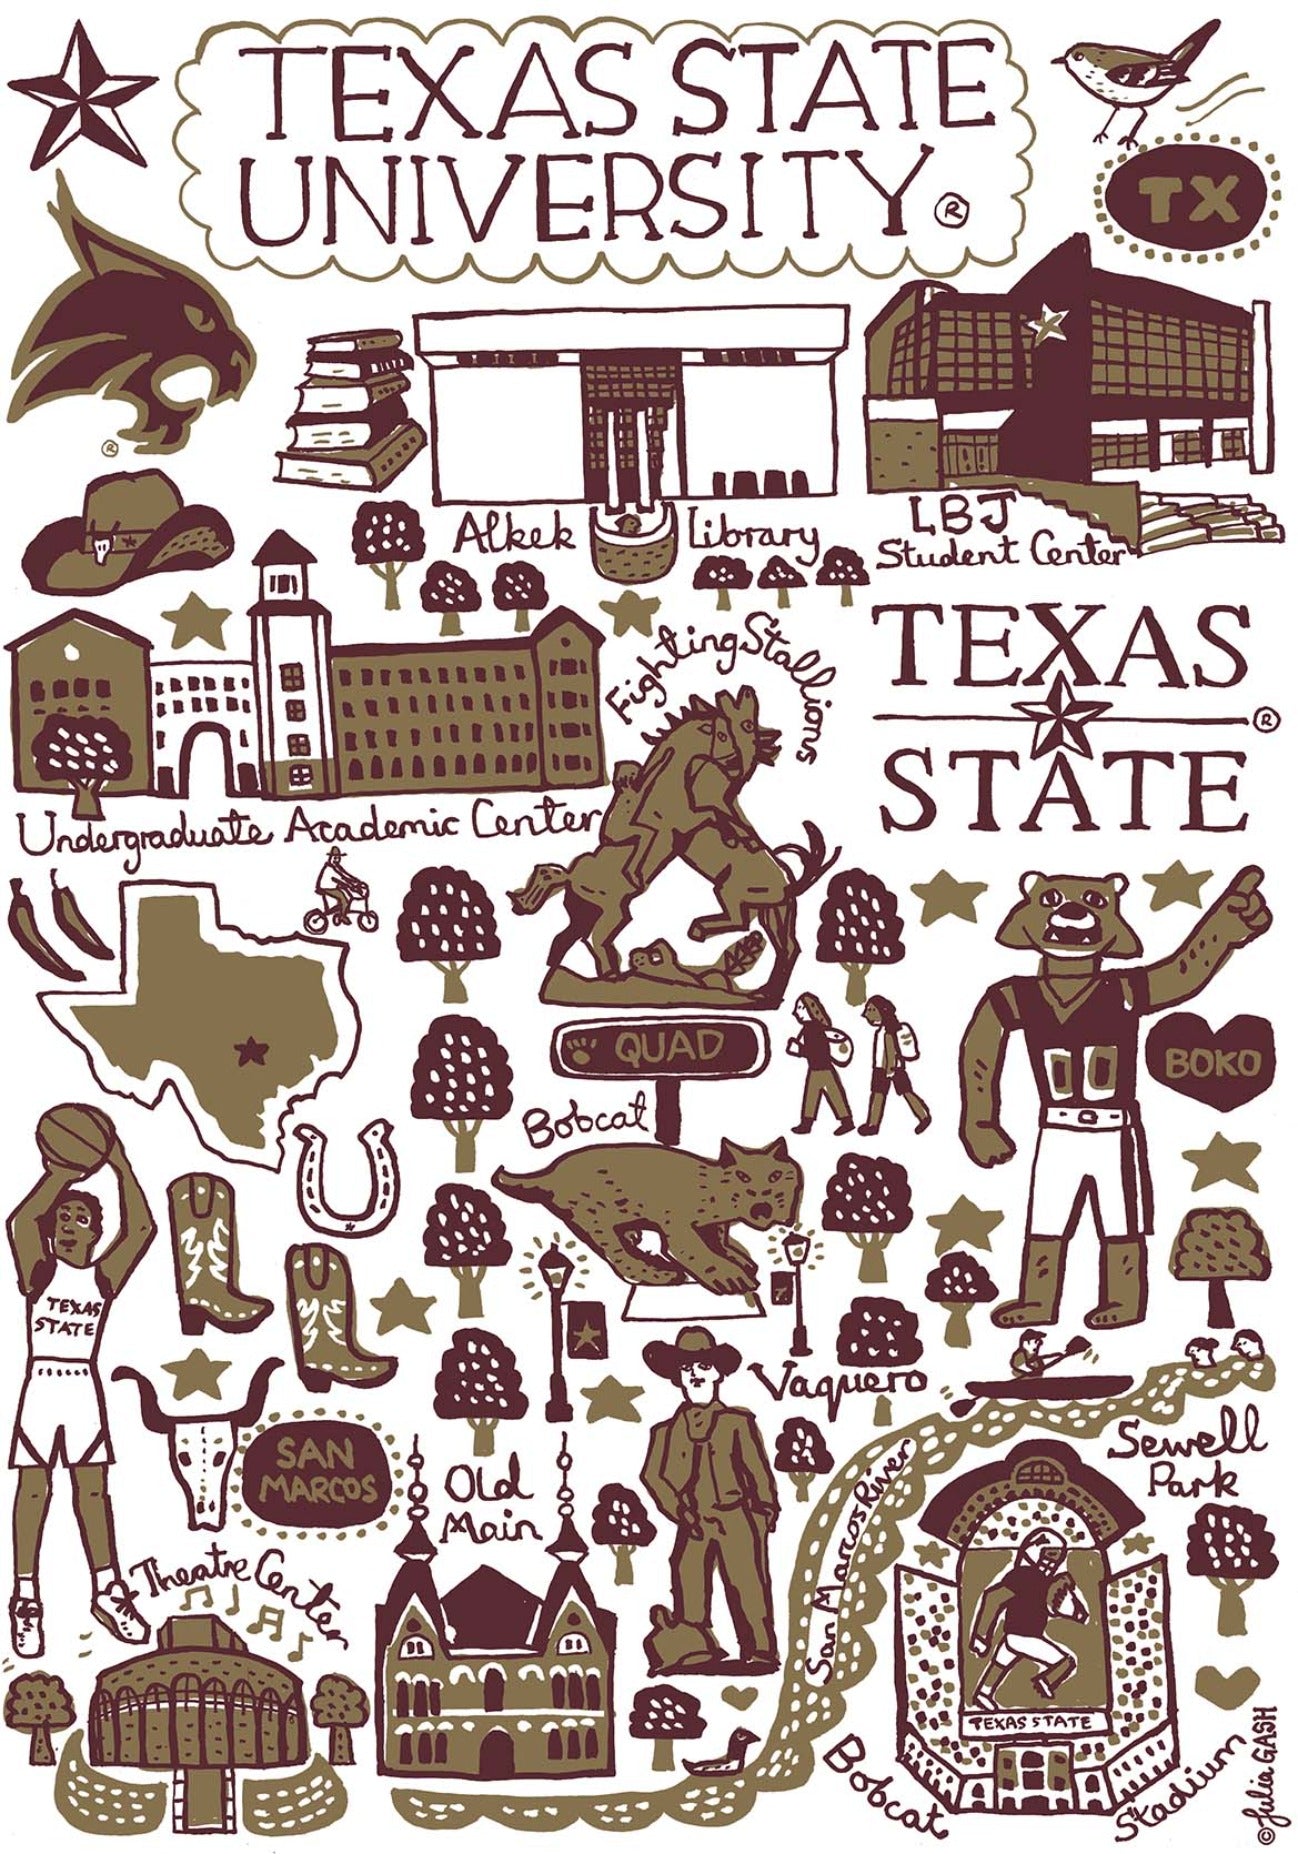 Texas State University by Julia Gash